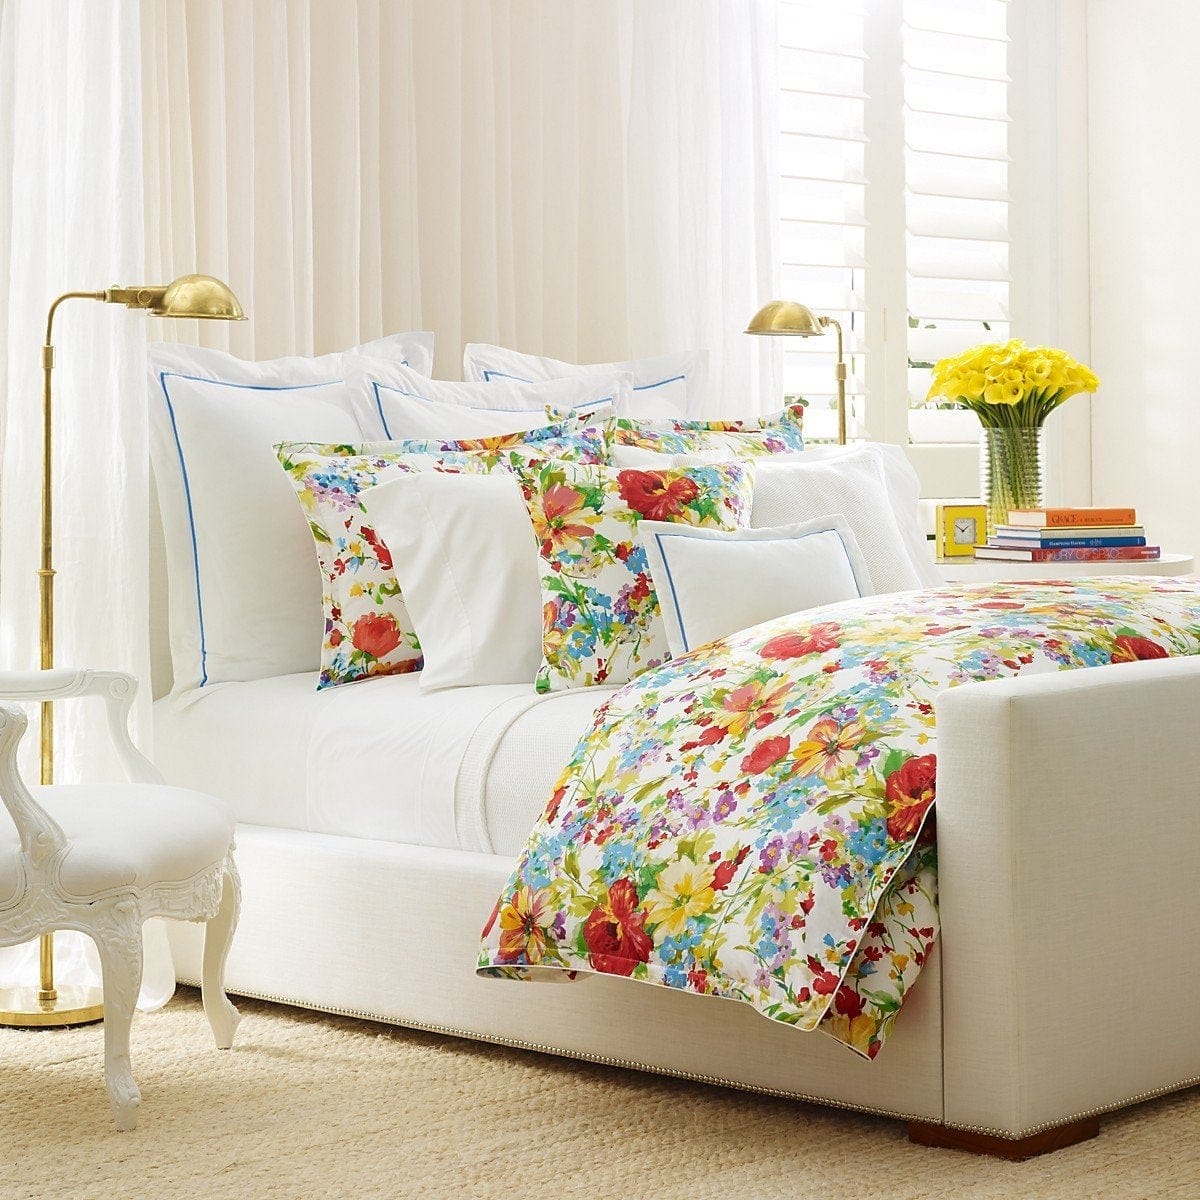 POLO RALPH LAUREN Comforter/Quilt/Duvet King / Multi Color POLO RALPH LAUREN - Colorful King Comforter